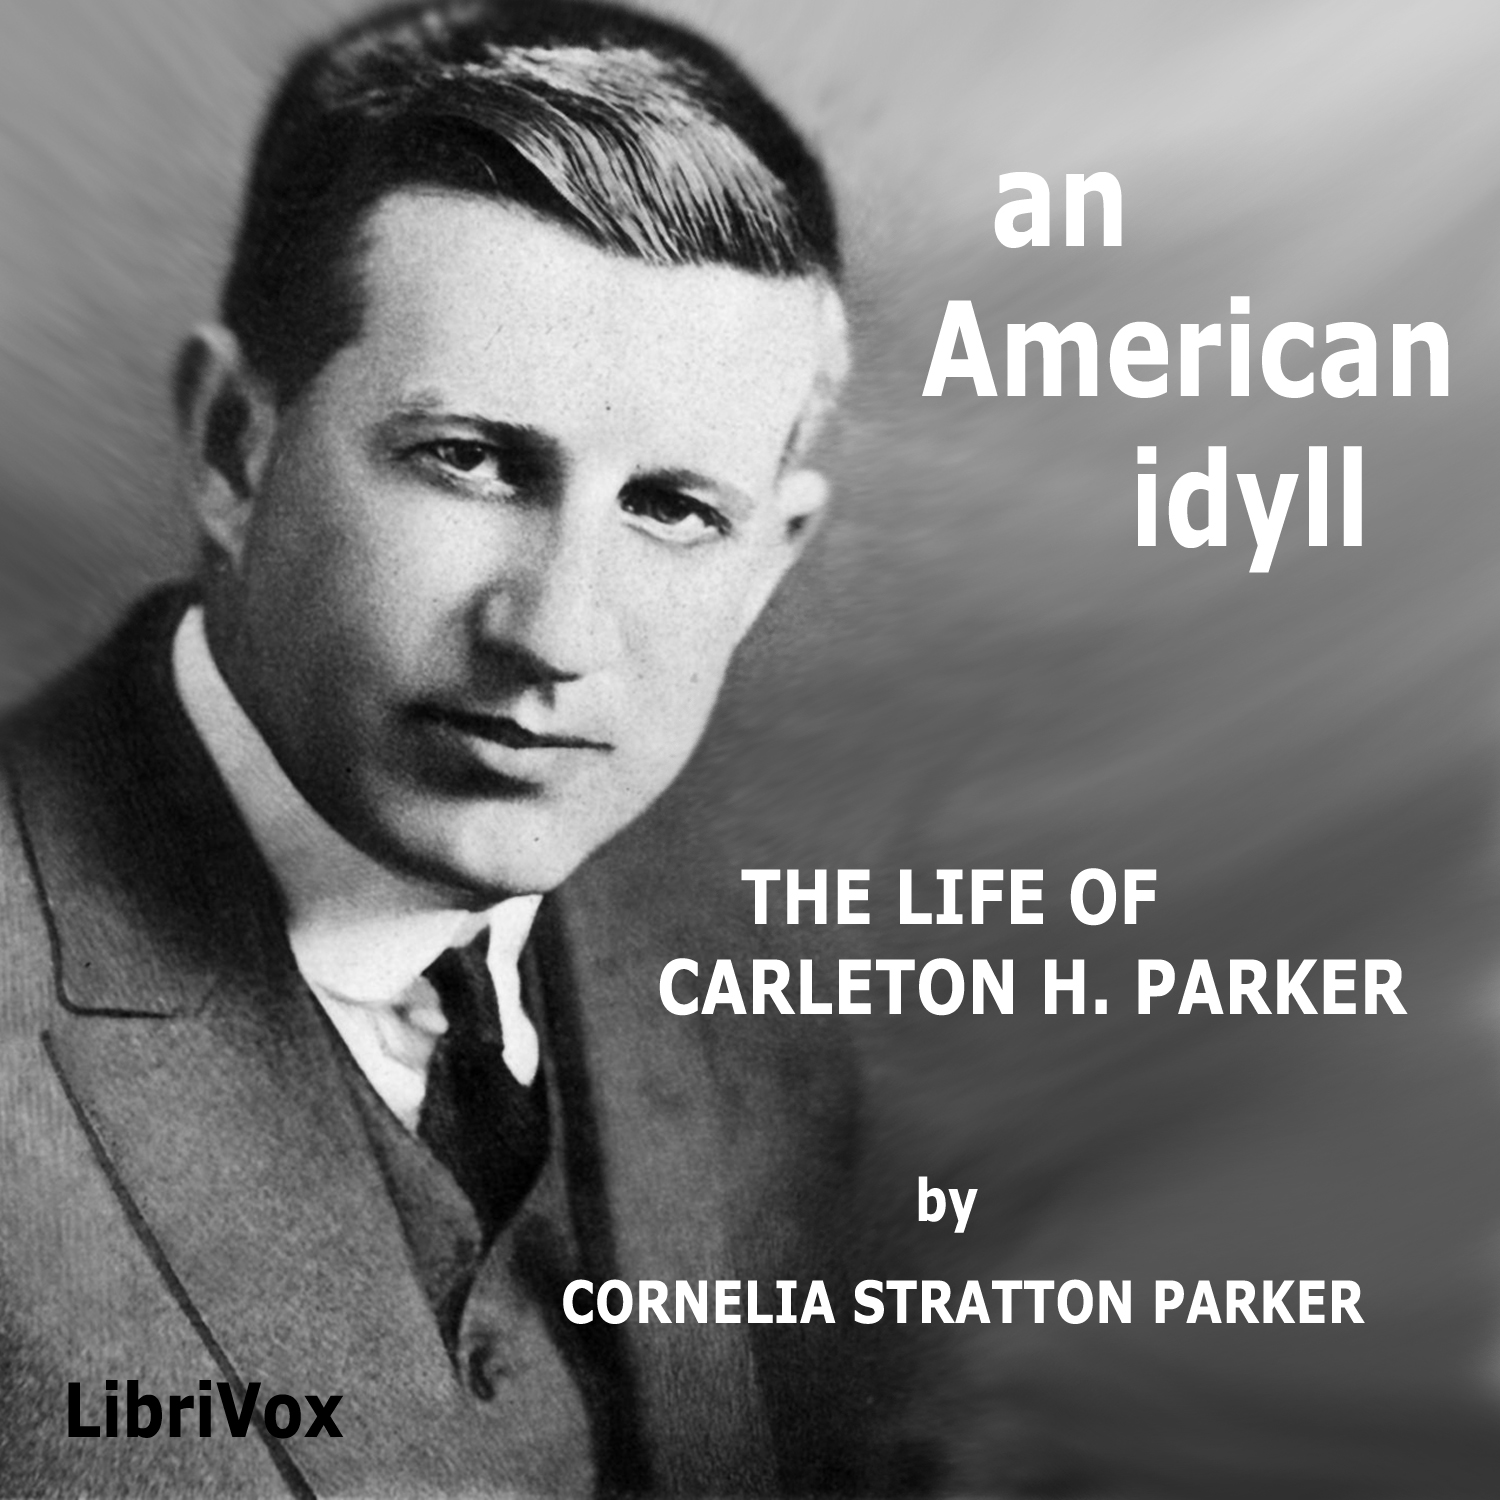 An American Idyll: The Life of Carlton H. Parker - Cornelia Stratton PARKER Audiobooks - Free Audio Books | Knigi-Audio.com/en/